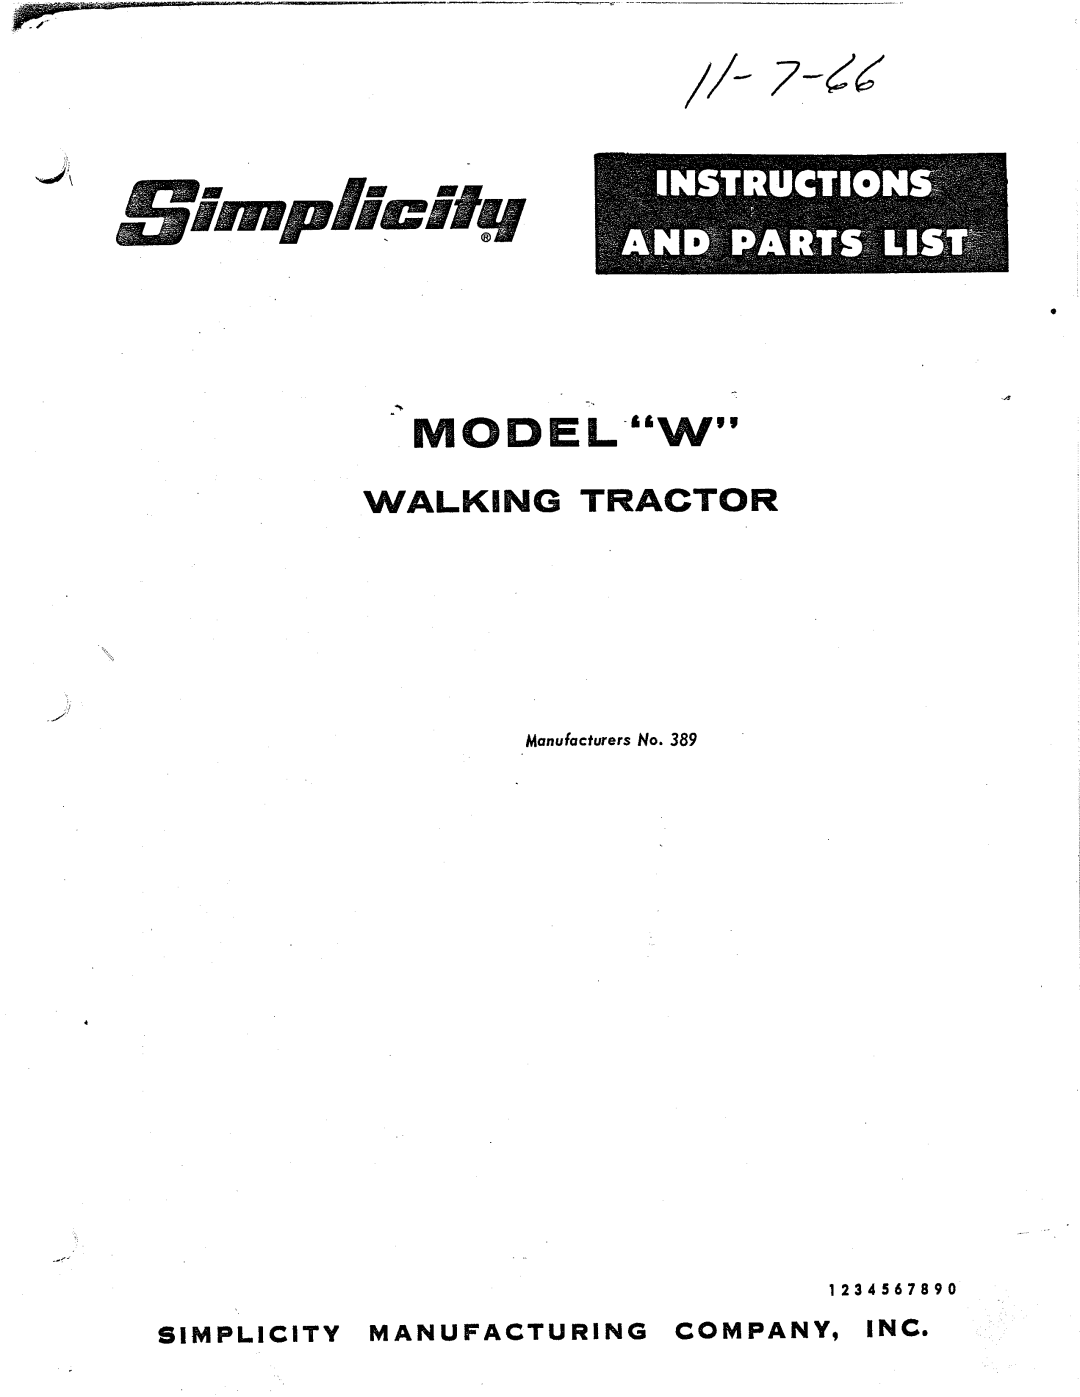 Simplicity 11-7-66, W manual 